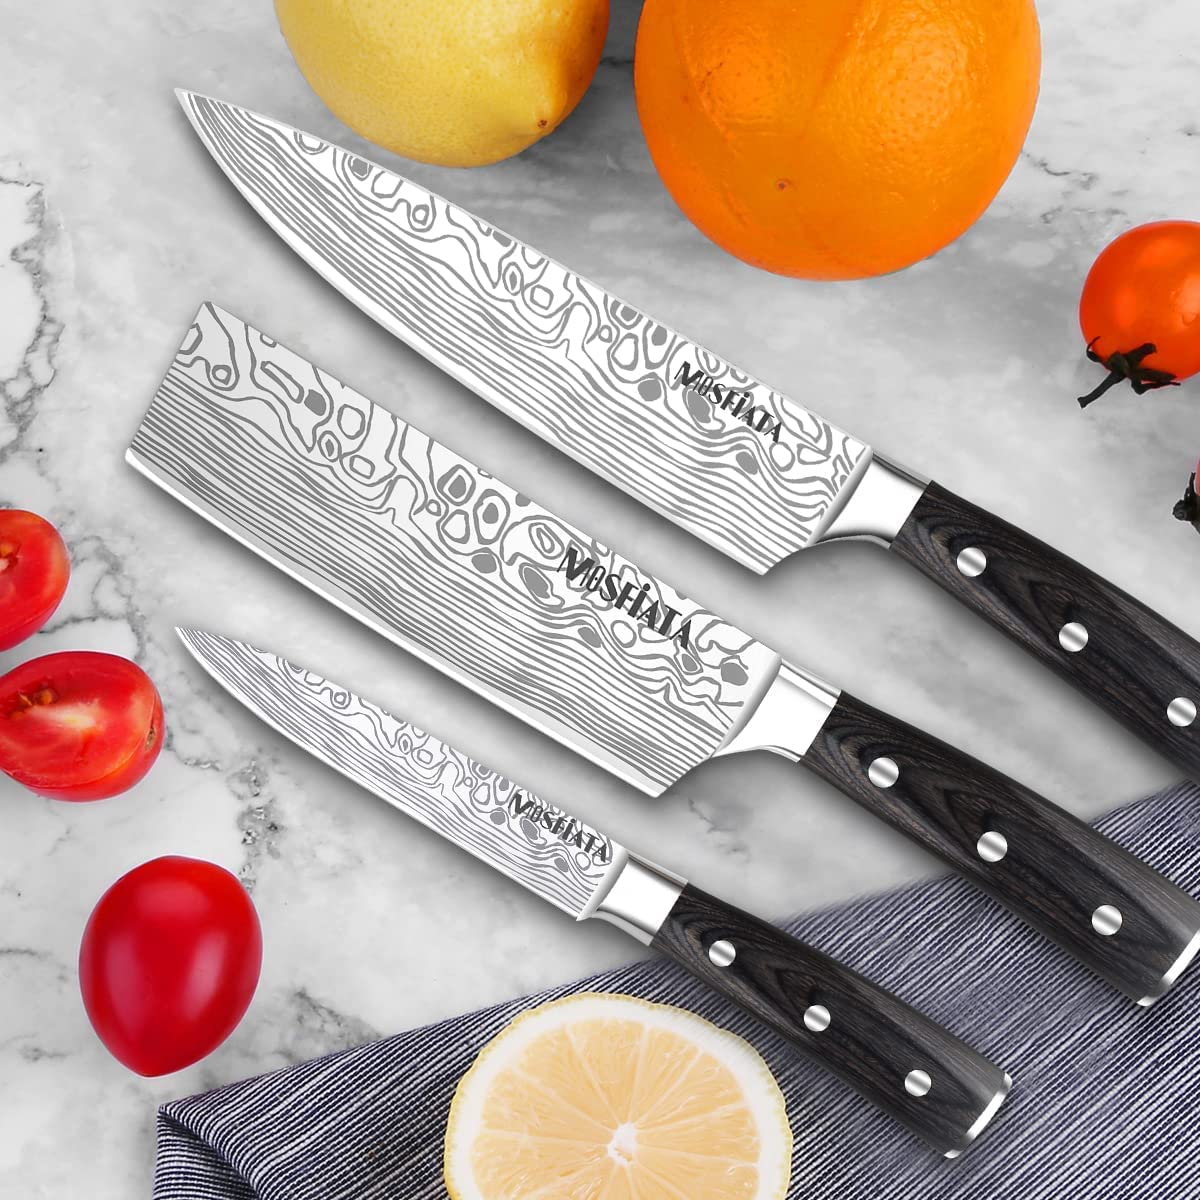  MOSFiATA Knife Set-18Pcs Kitchen Knife Set with Knife